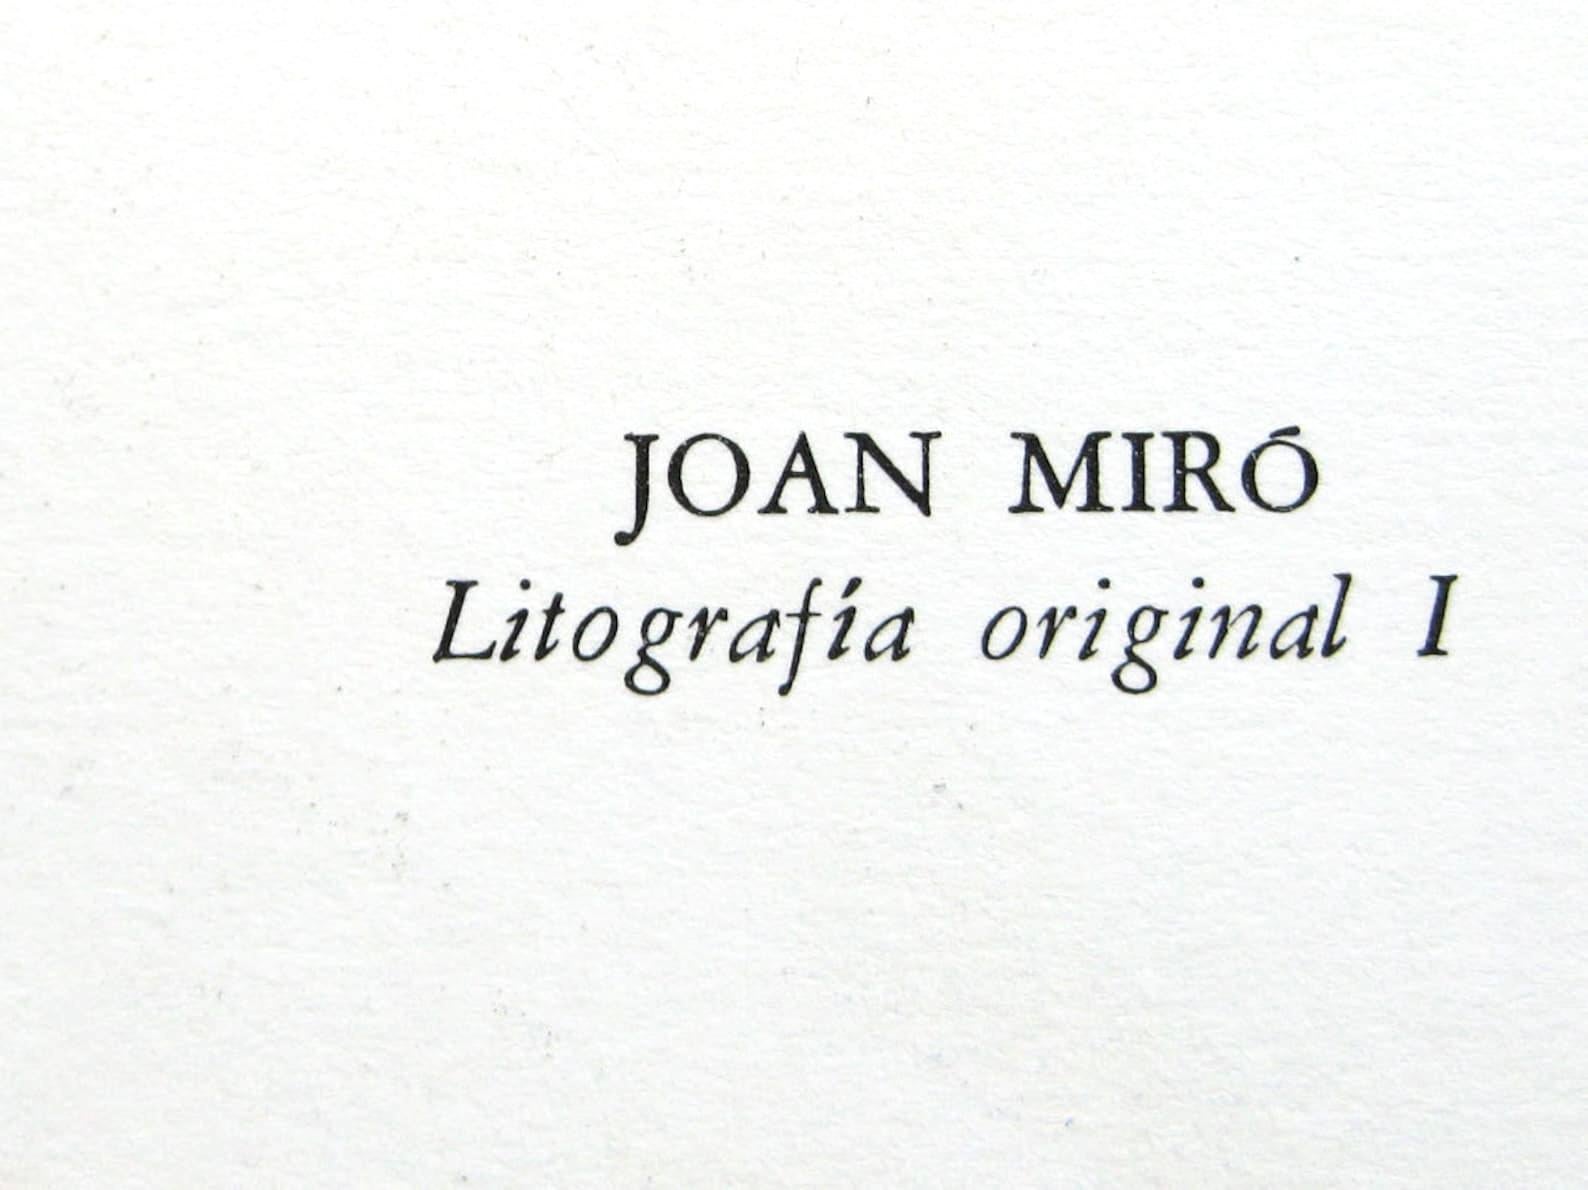 Miró, Litógrafia original I (Cramer 160; Mourlot 857), Litógrafo I (after) For Sale 2